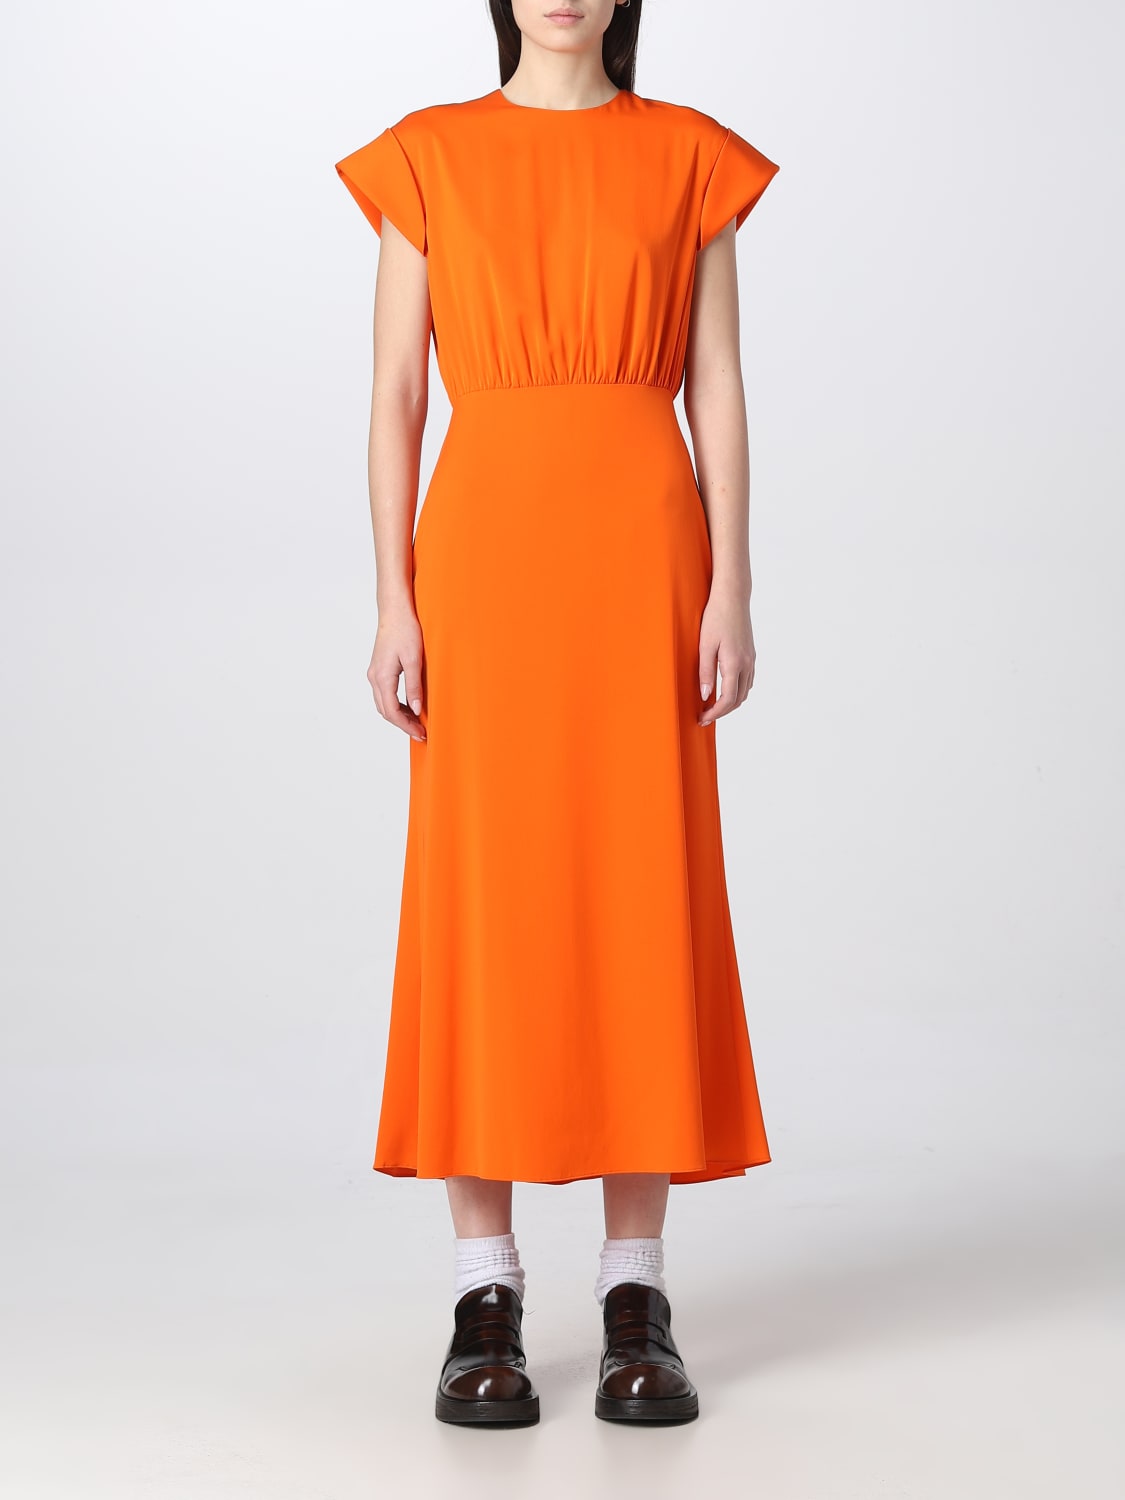 Sportmax Outlet: dress for woman - Tangerine | Sportmax dress